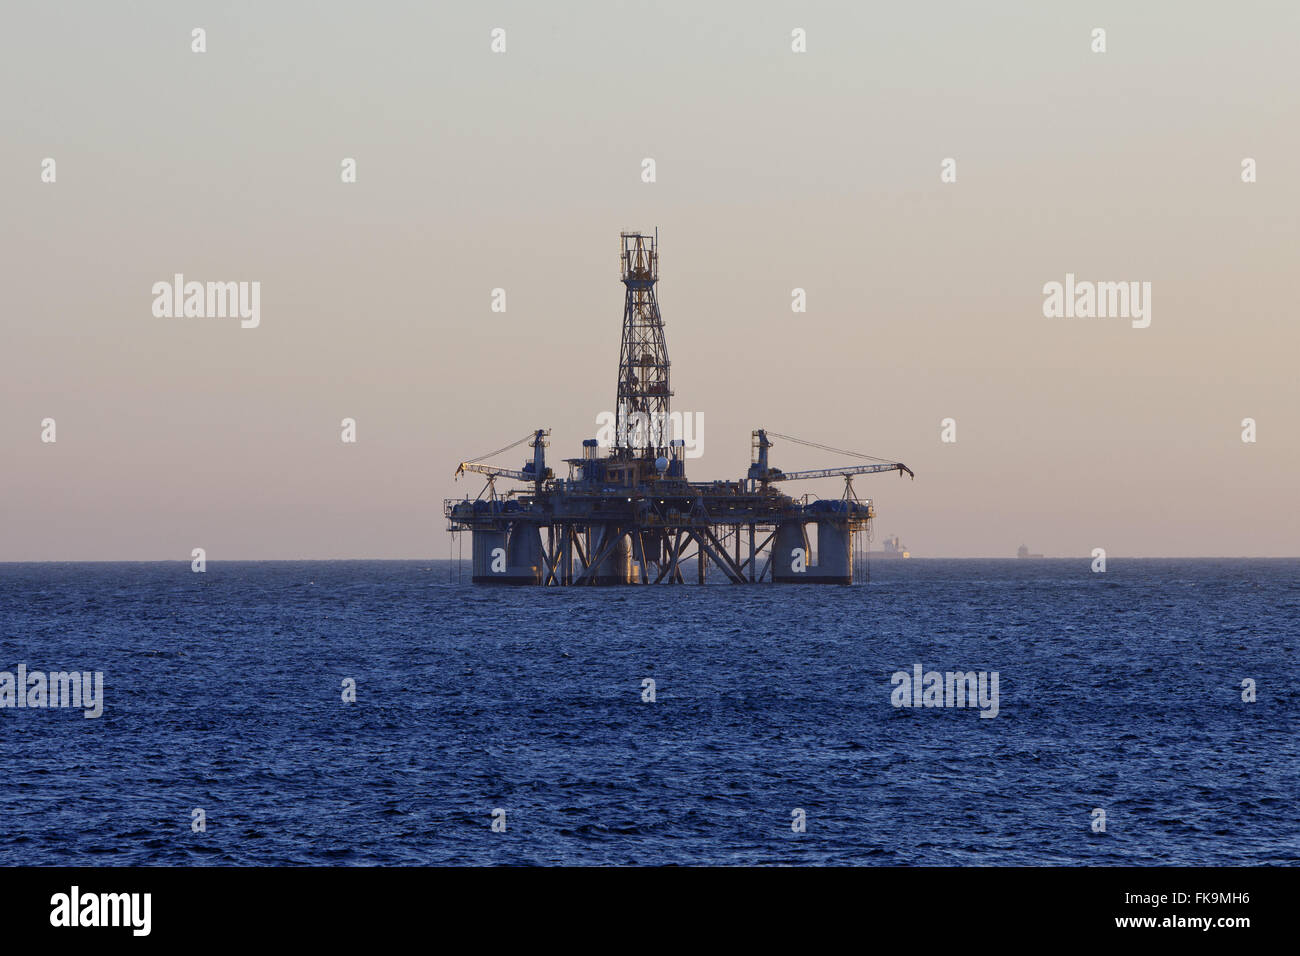 The oil platform seen from the beach at dusk Itacoatiara - oceanic region Stock Photo